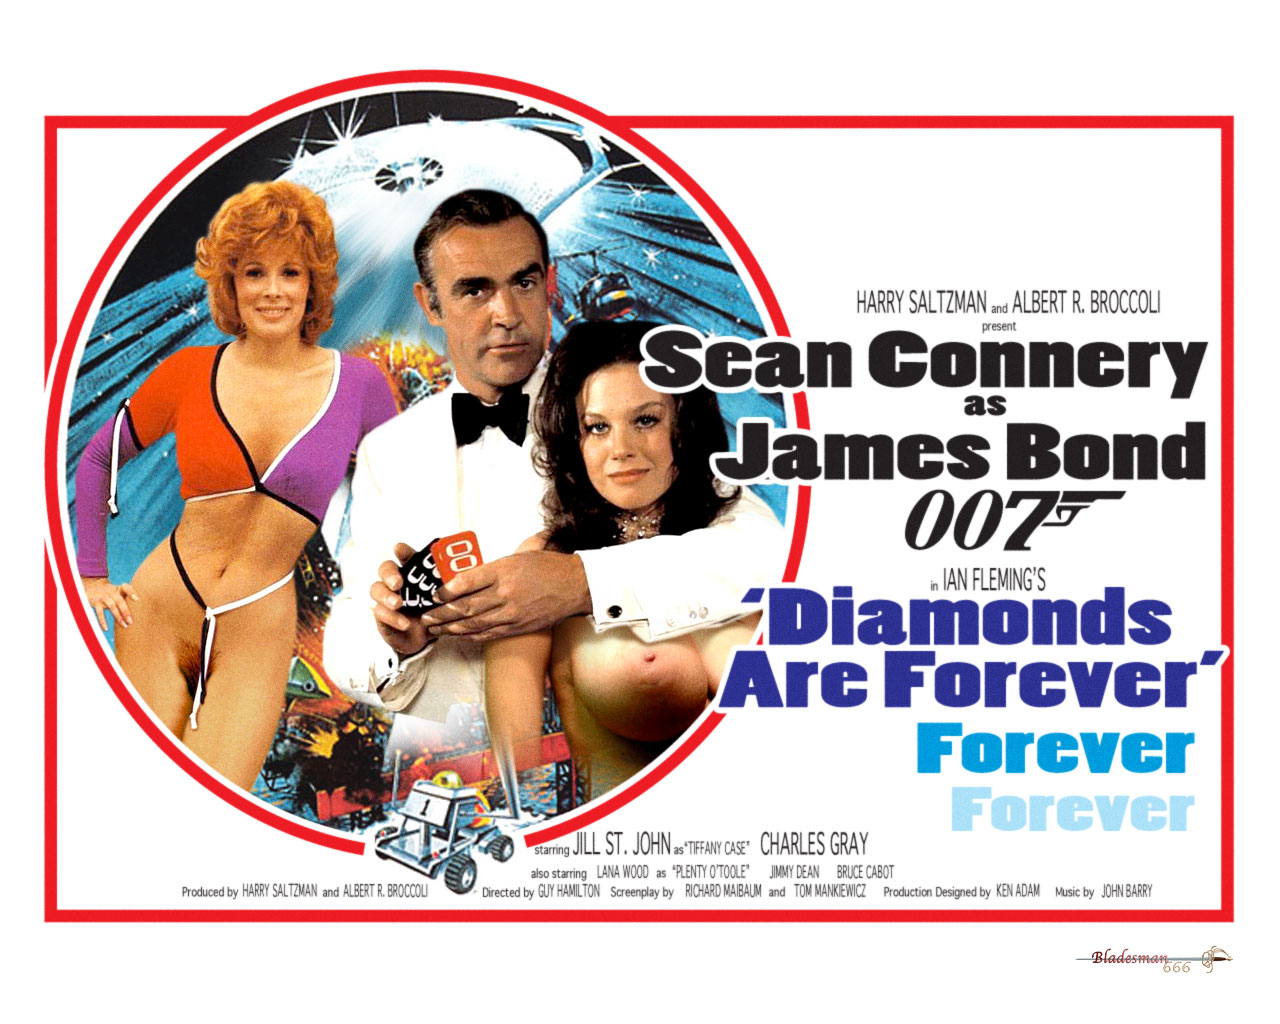 Post 1692943 Bladesman666 Diamonds Are Forever Fakes James Bond James